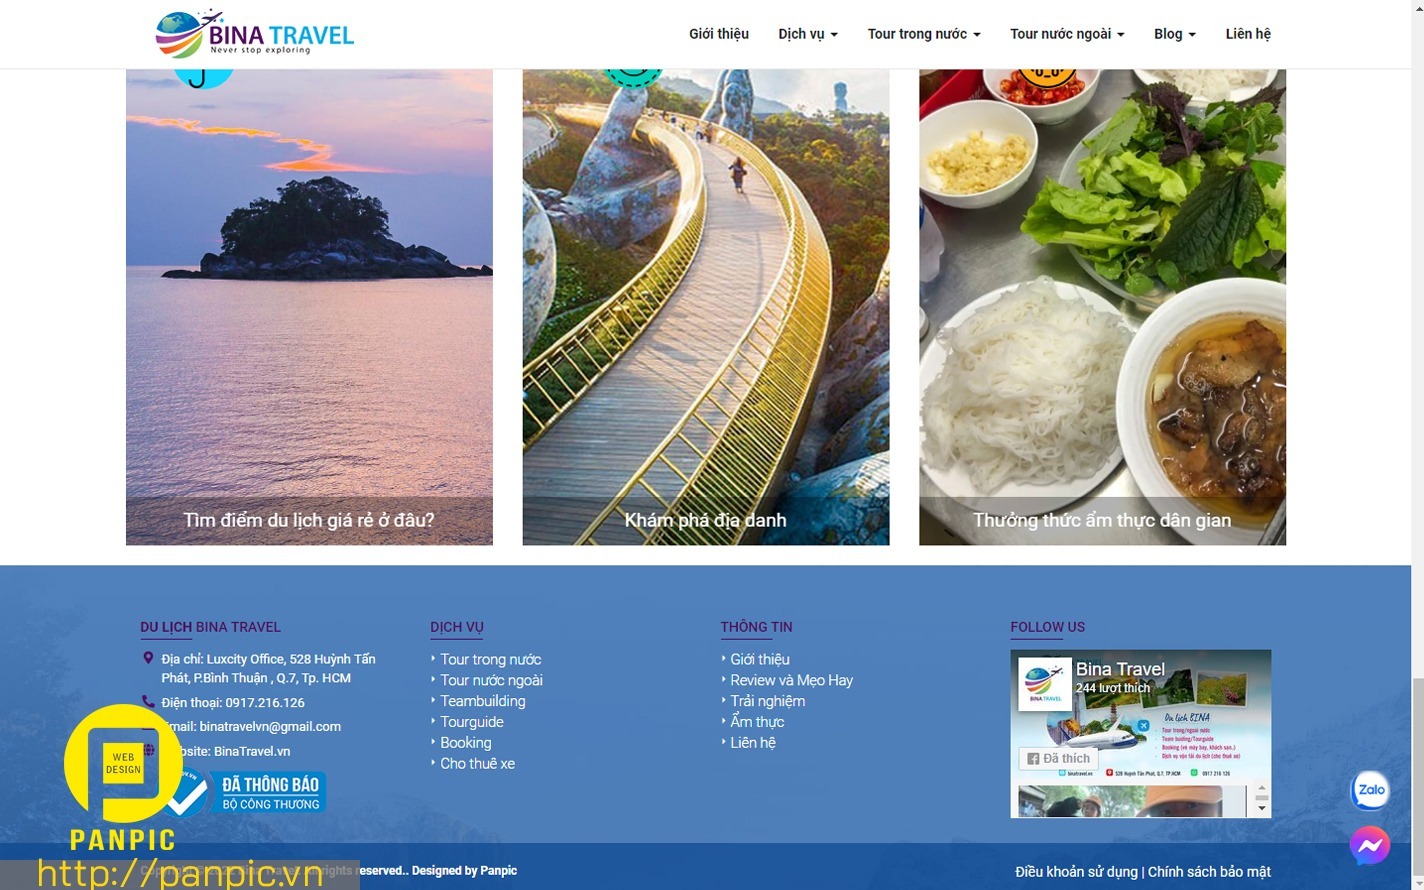 Panpic designed the website for Bina Travel travel company